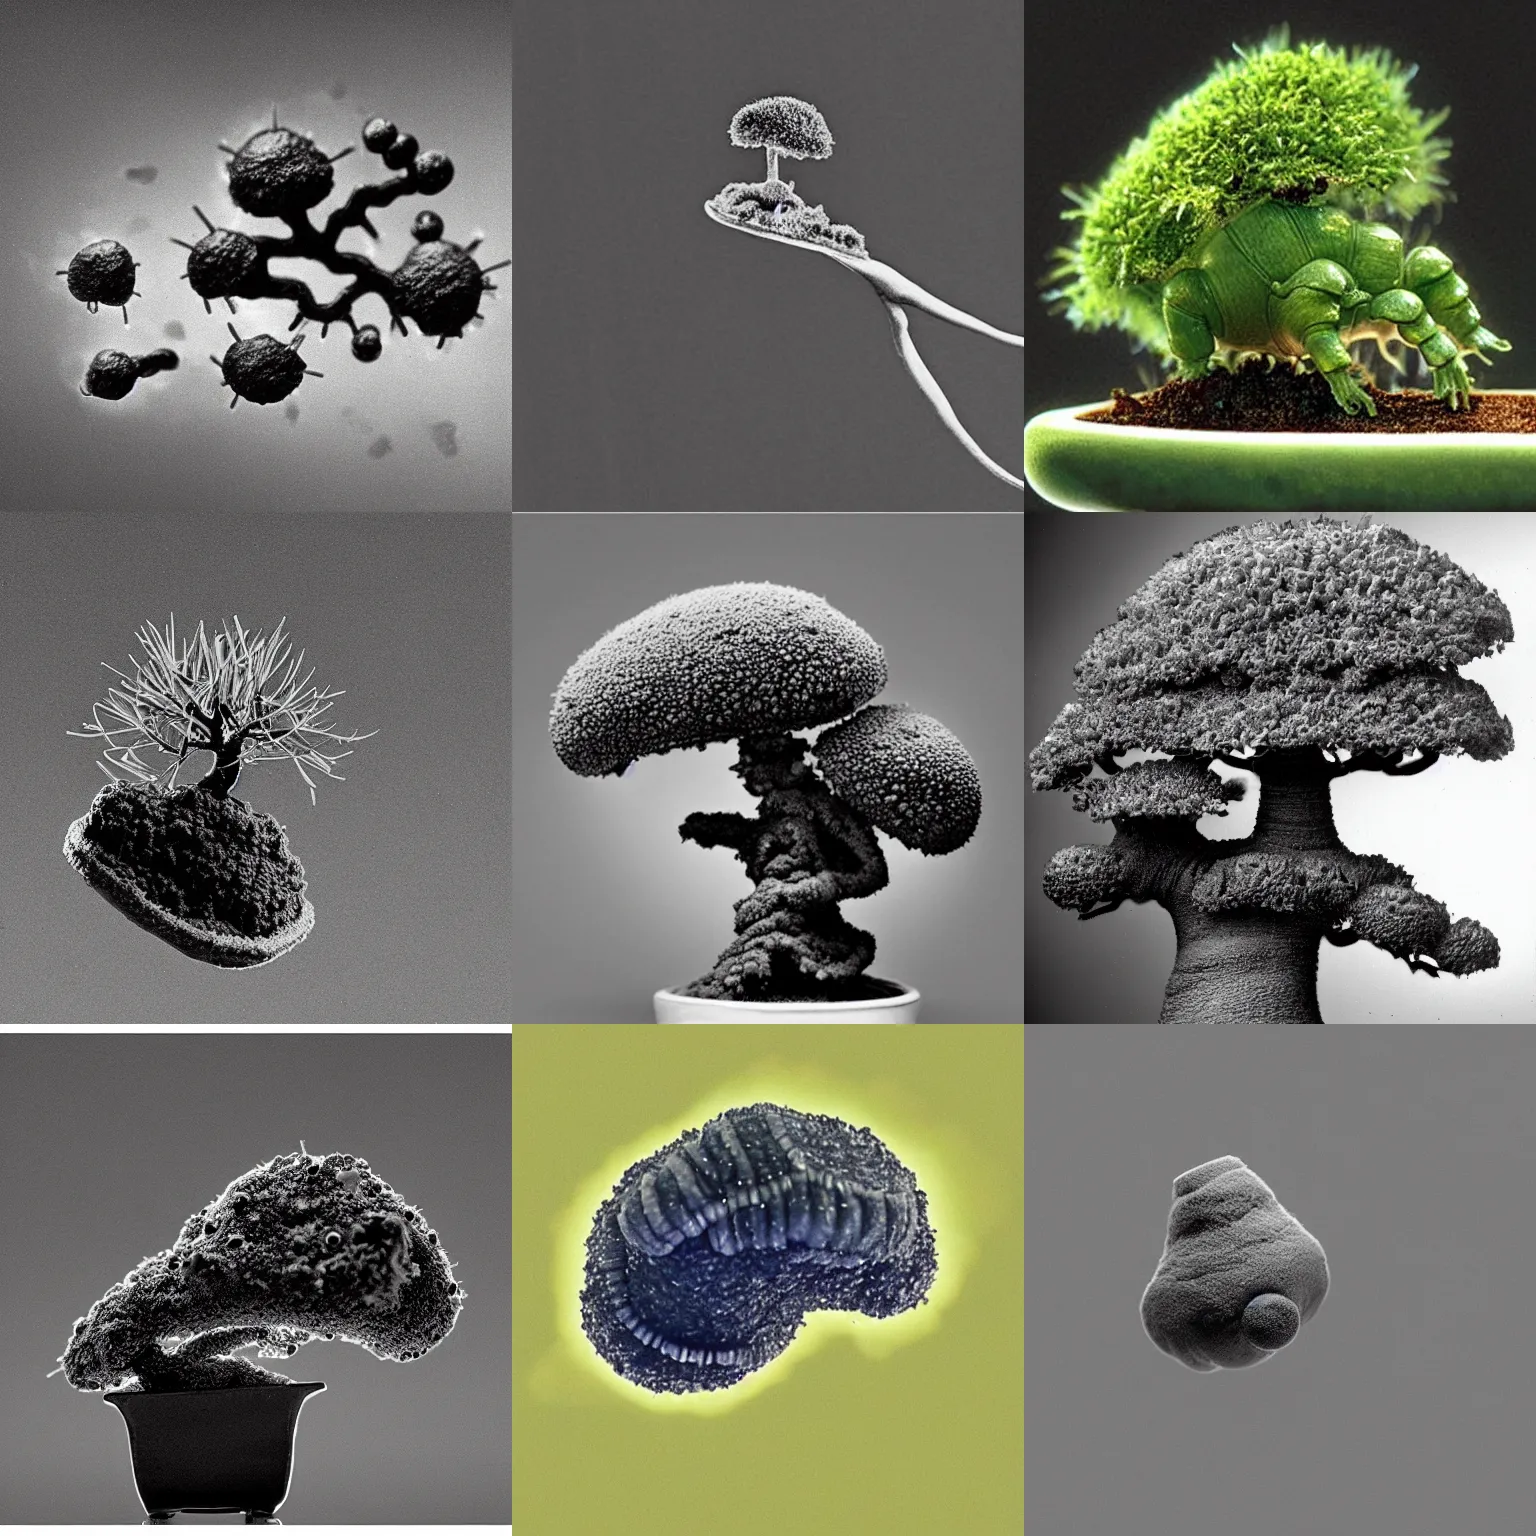 Prompt: a microscopic tardigrade shaped like a bonsai tree, phase-contrast microscopy electron microscope capture